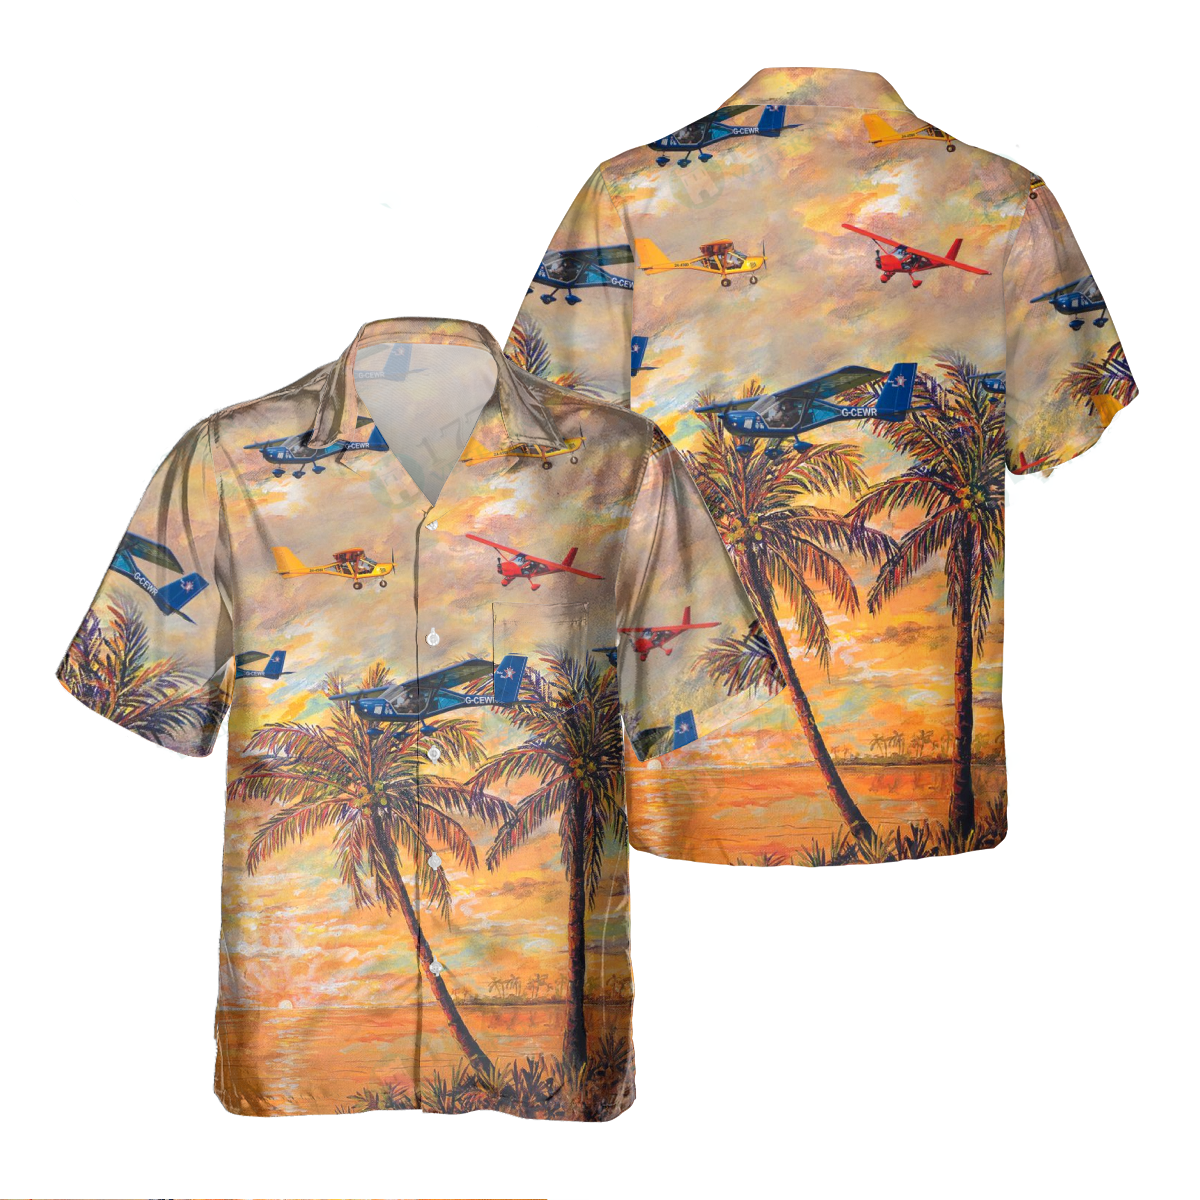 A-22 Foxbat Pocket Hawaiian Shirt C1/ Hawaiian Shirt for Men Dad Veteran/ Patriot Day